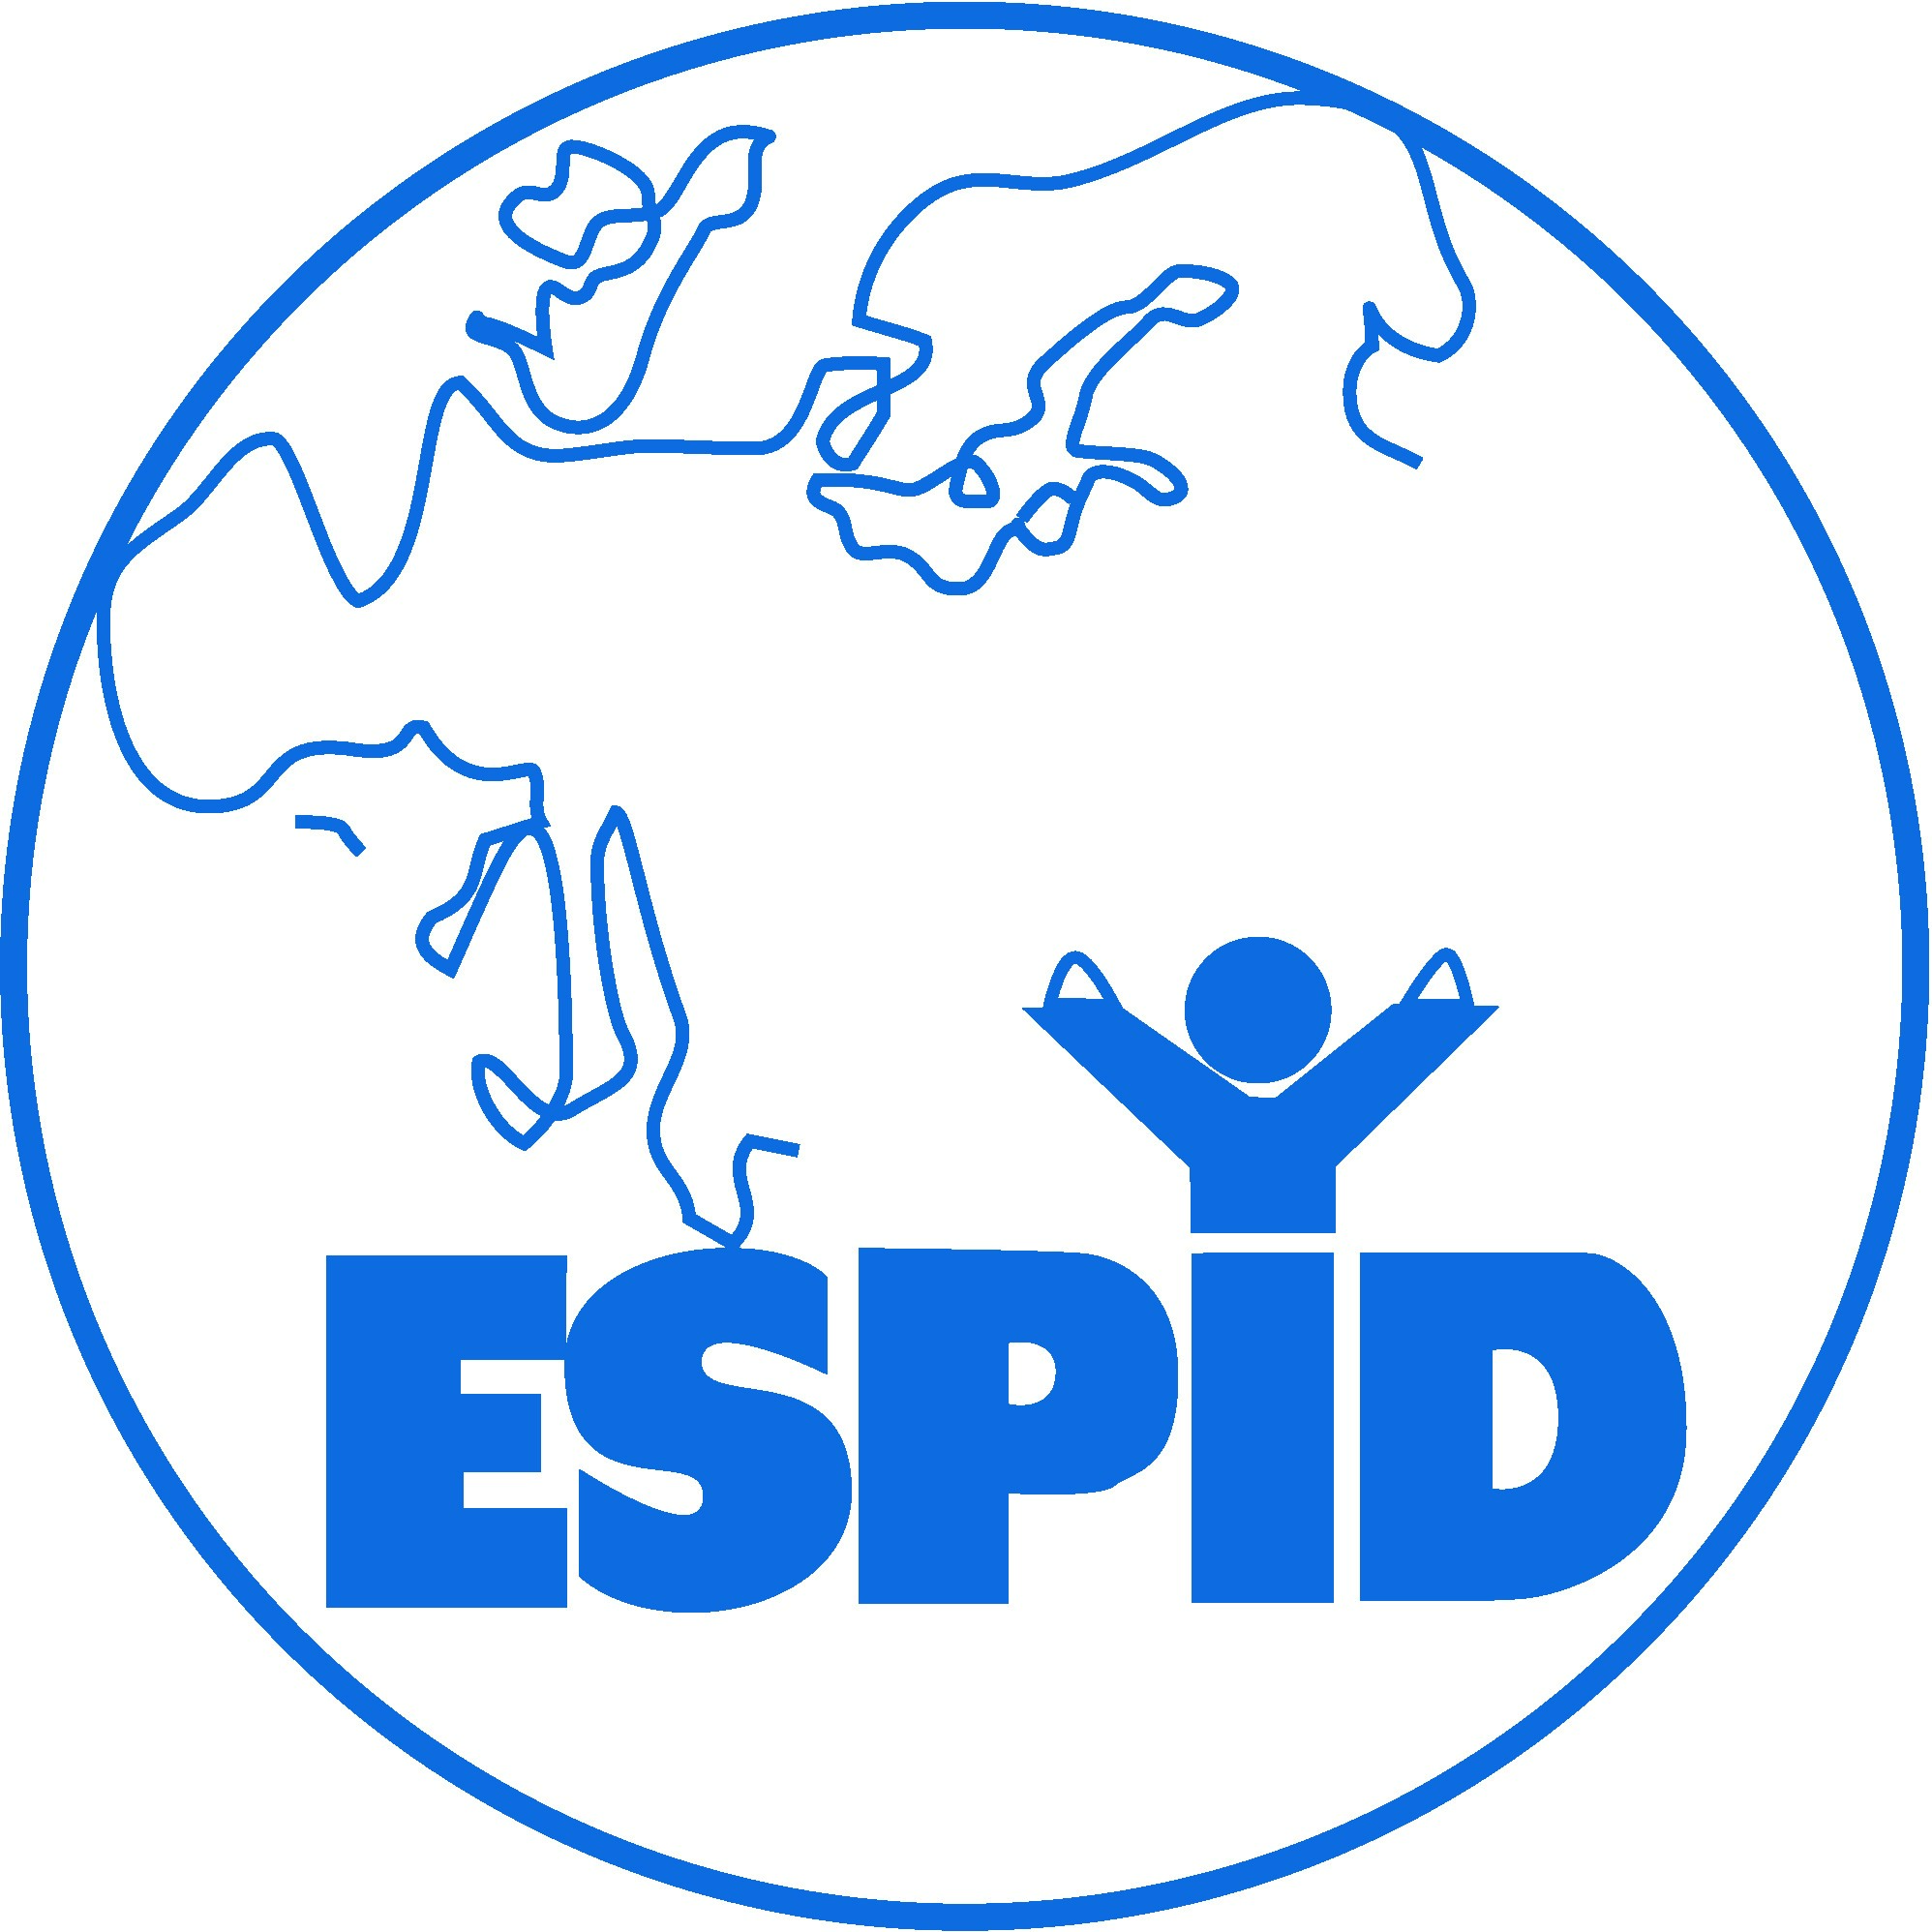 ESPID 2020 Virtual Meetin - The 38th Annual Meeting of The European Society for Paediatric Infectious Diseases